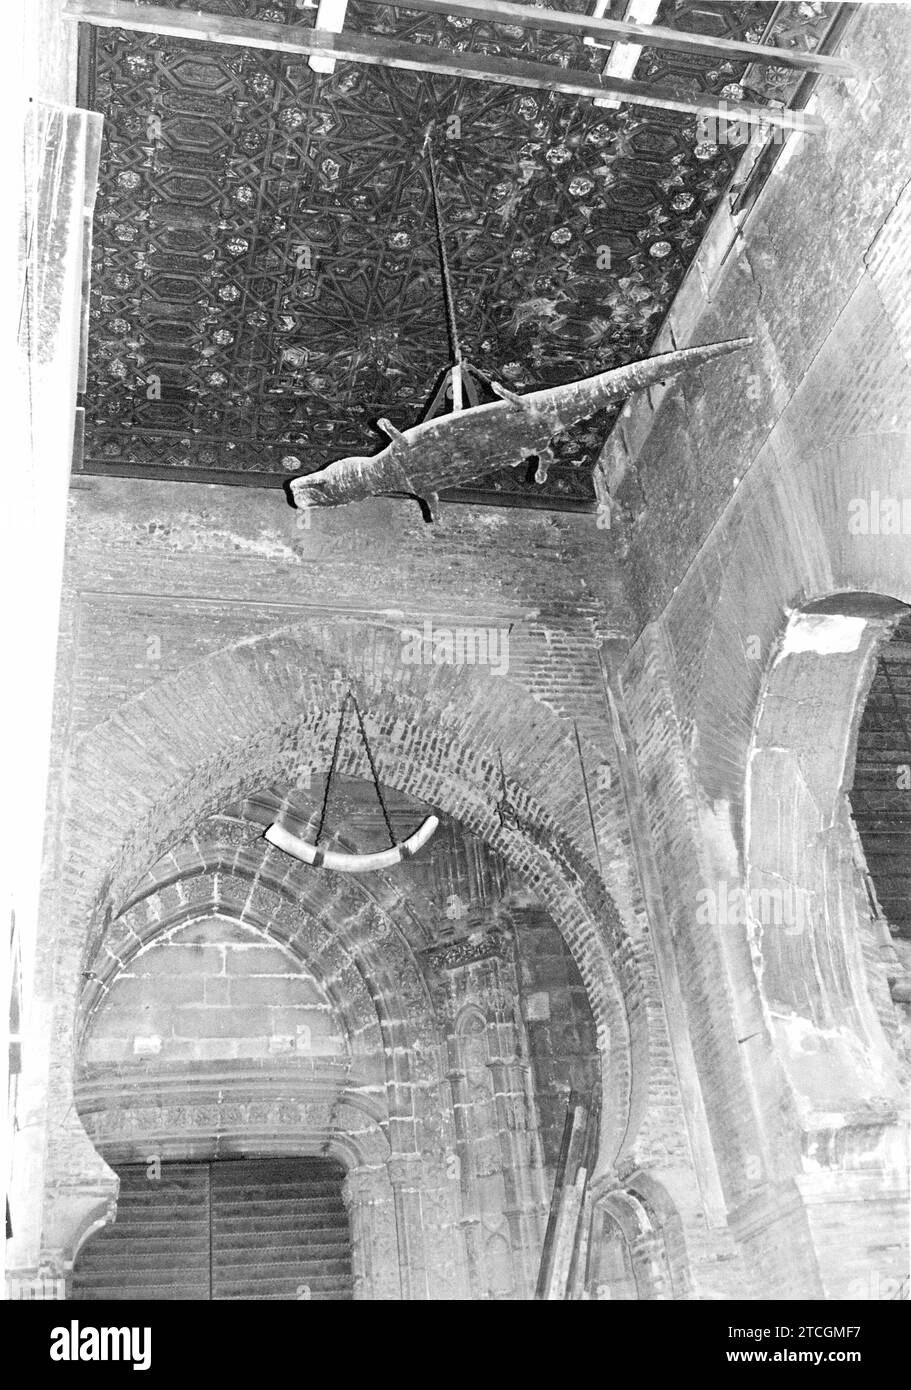 01/24/1993. Innenraum der Kathedrale. Quelle: Album / Archivo ABC / Díaz Japón Stockfoto